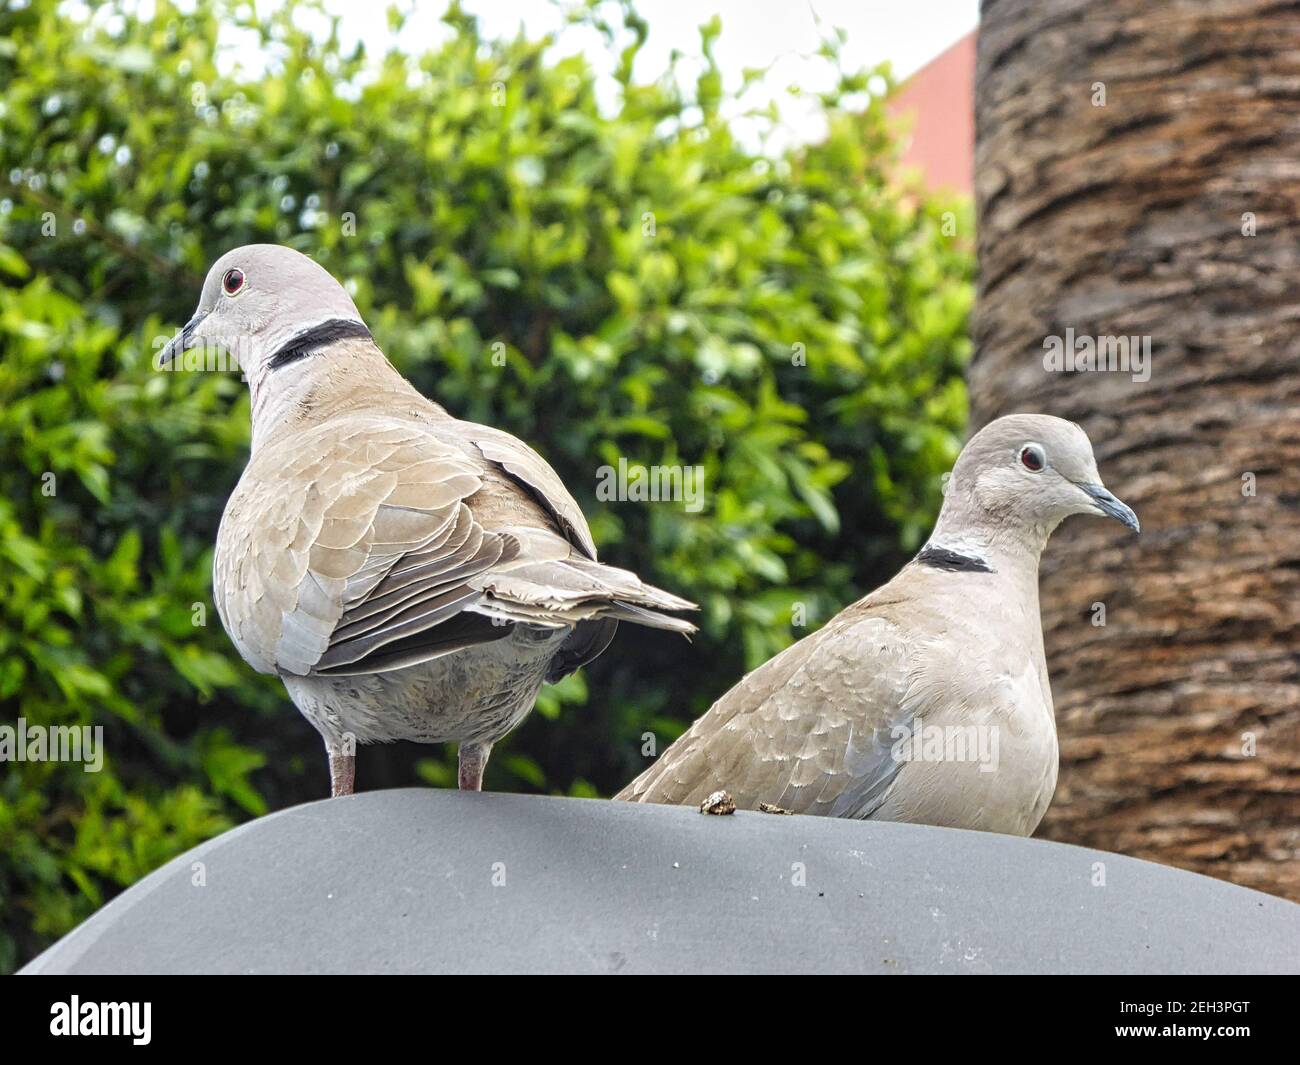 Pigeons turcs à collier Photo Stock - Alamy